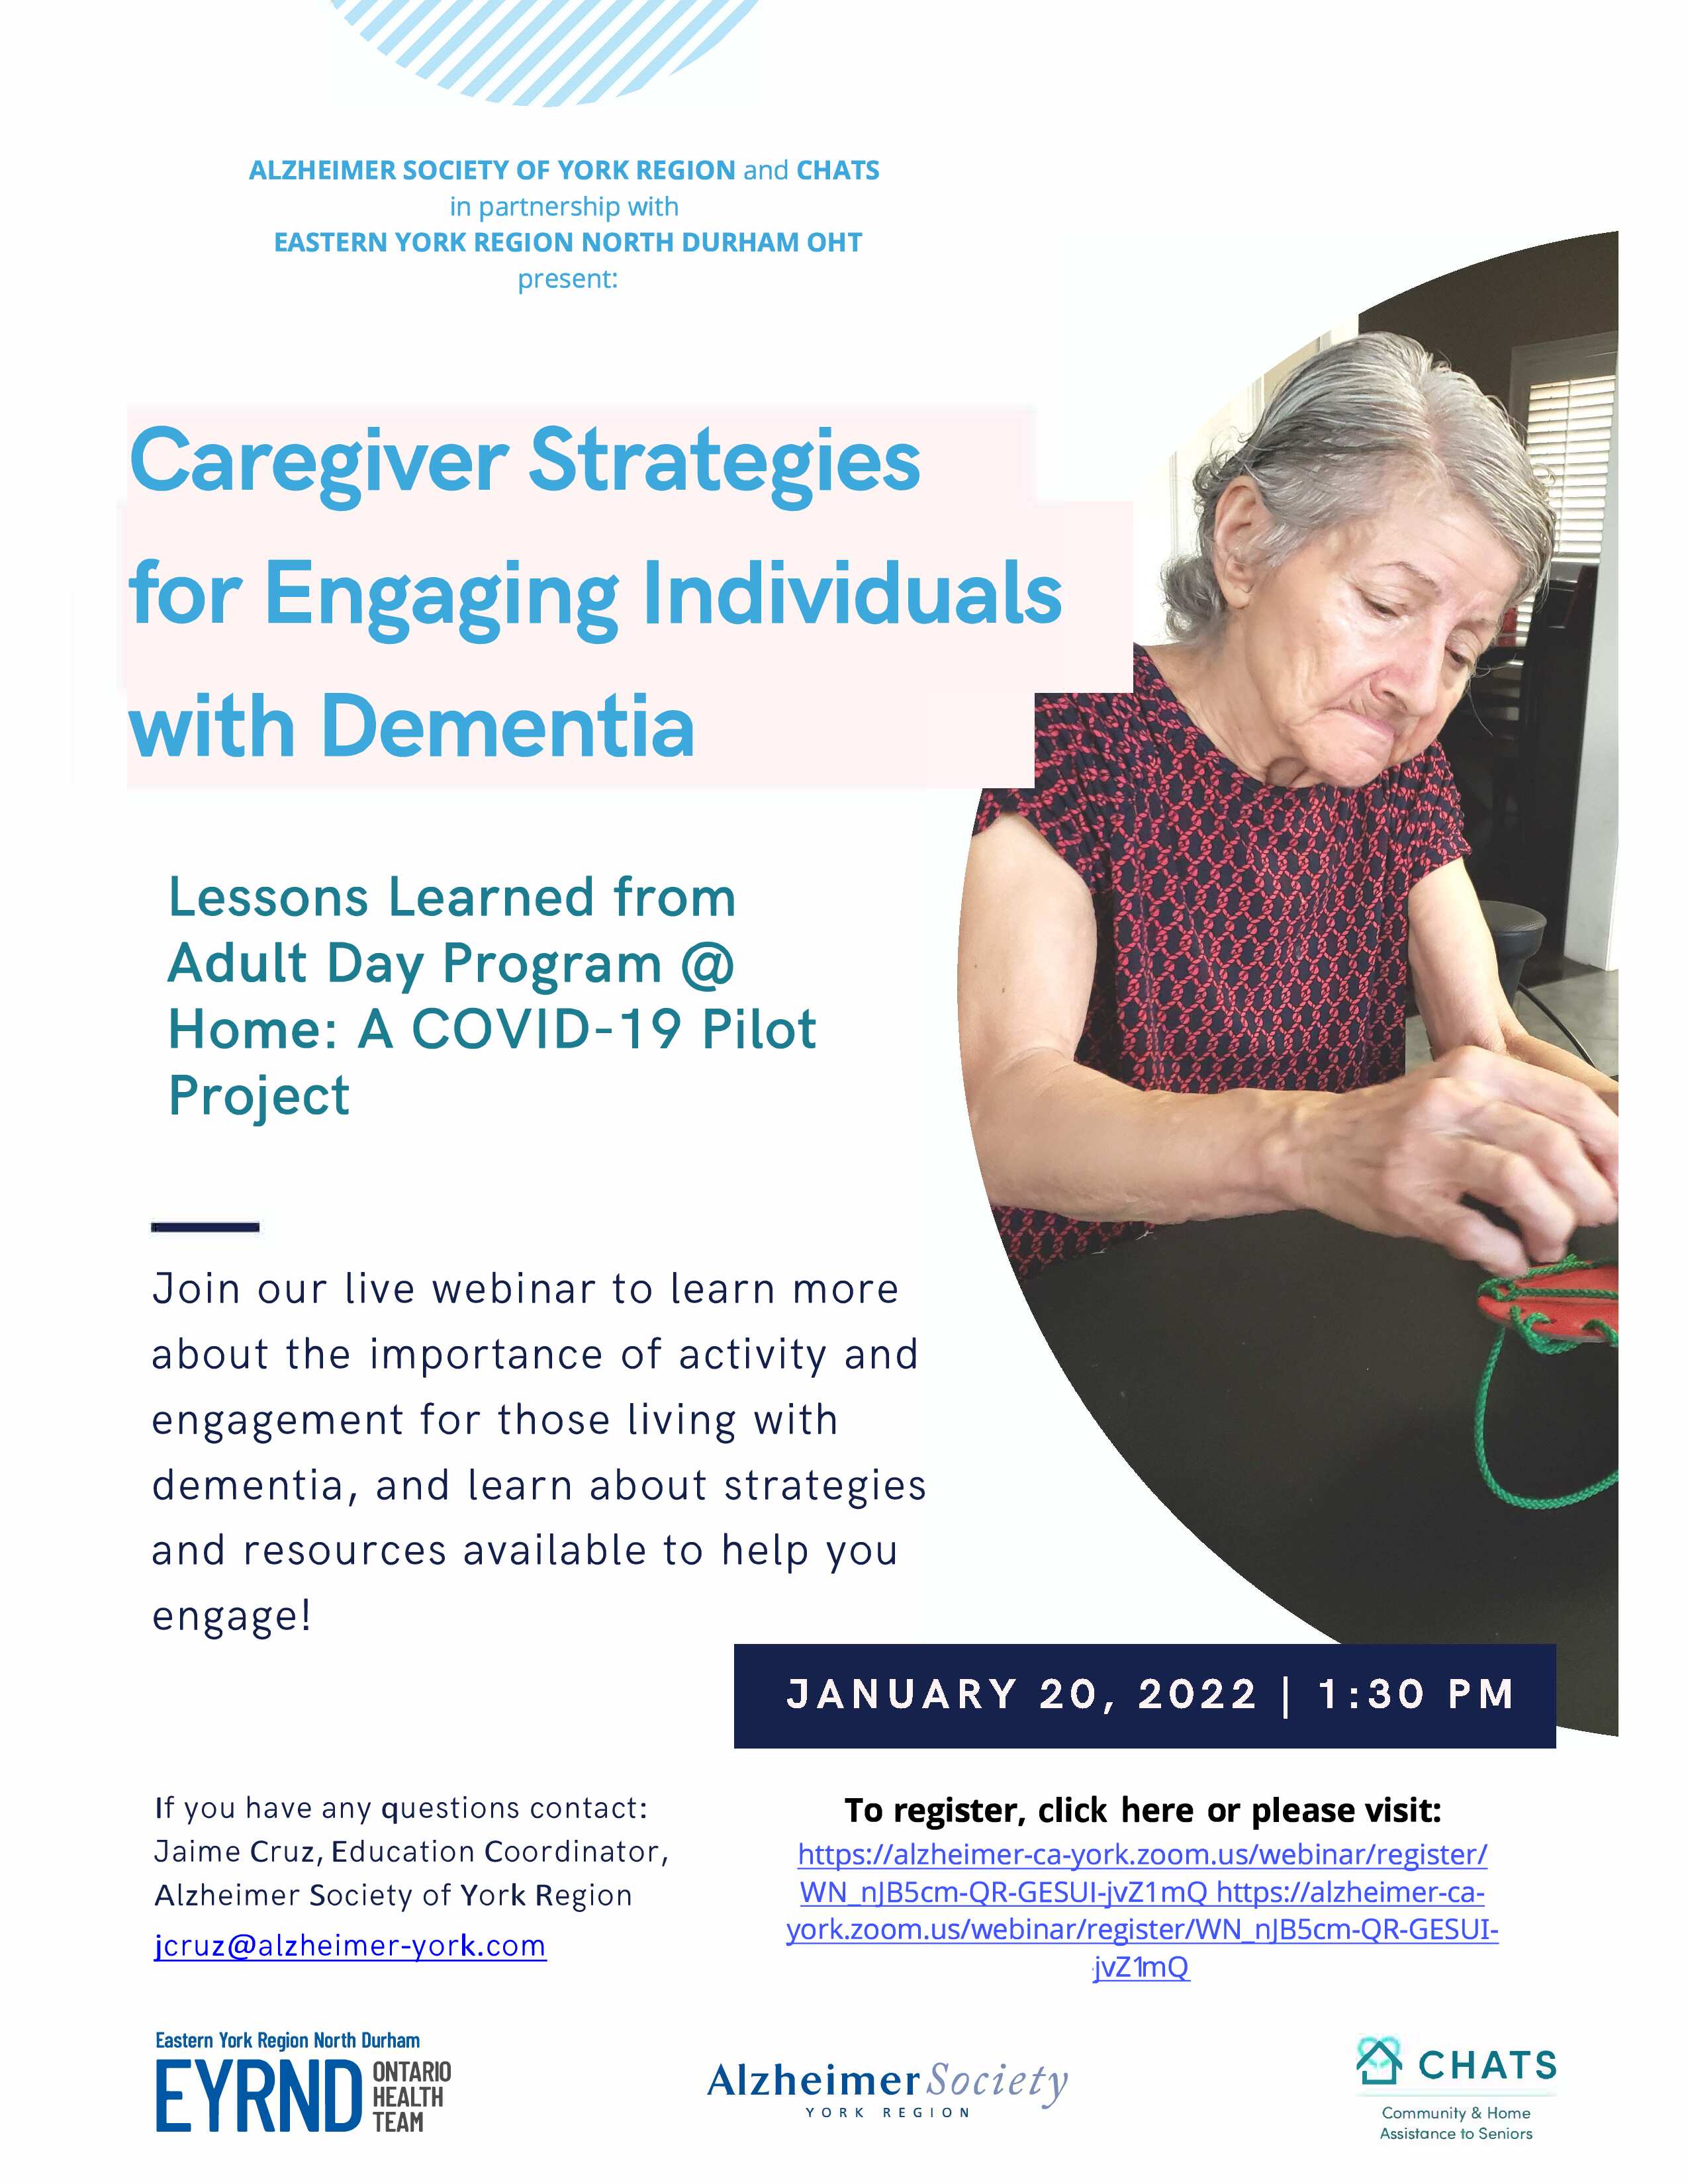 Free webinar for Caregivers 